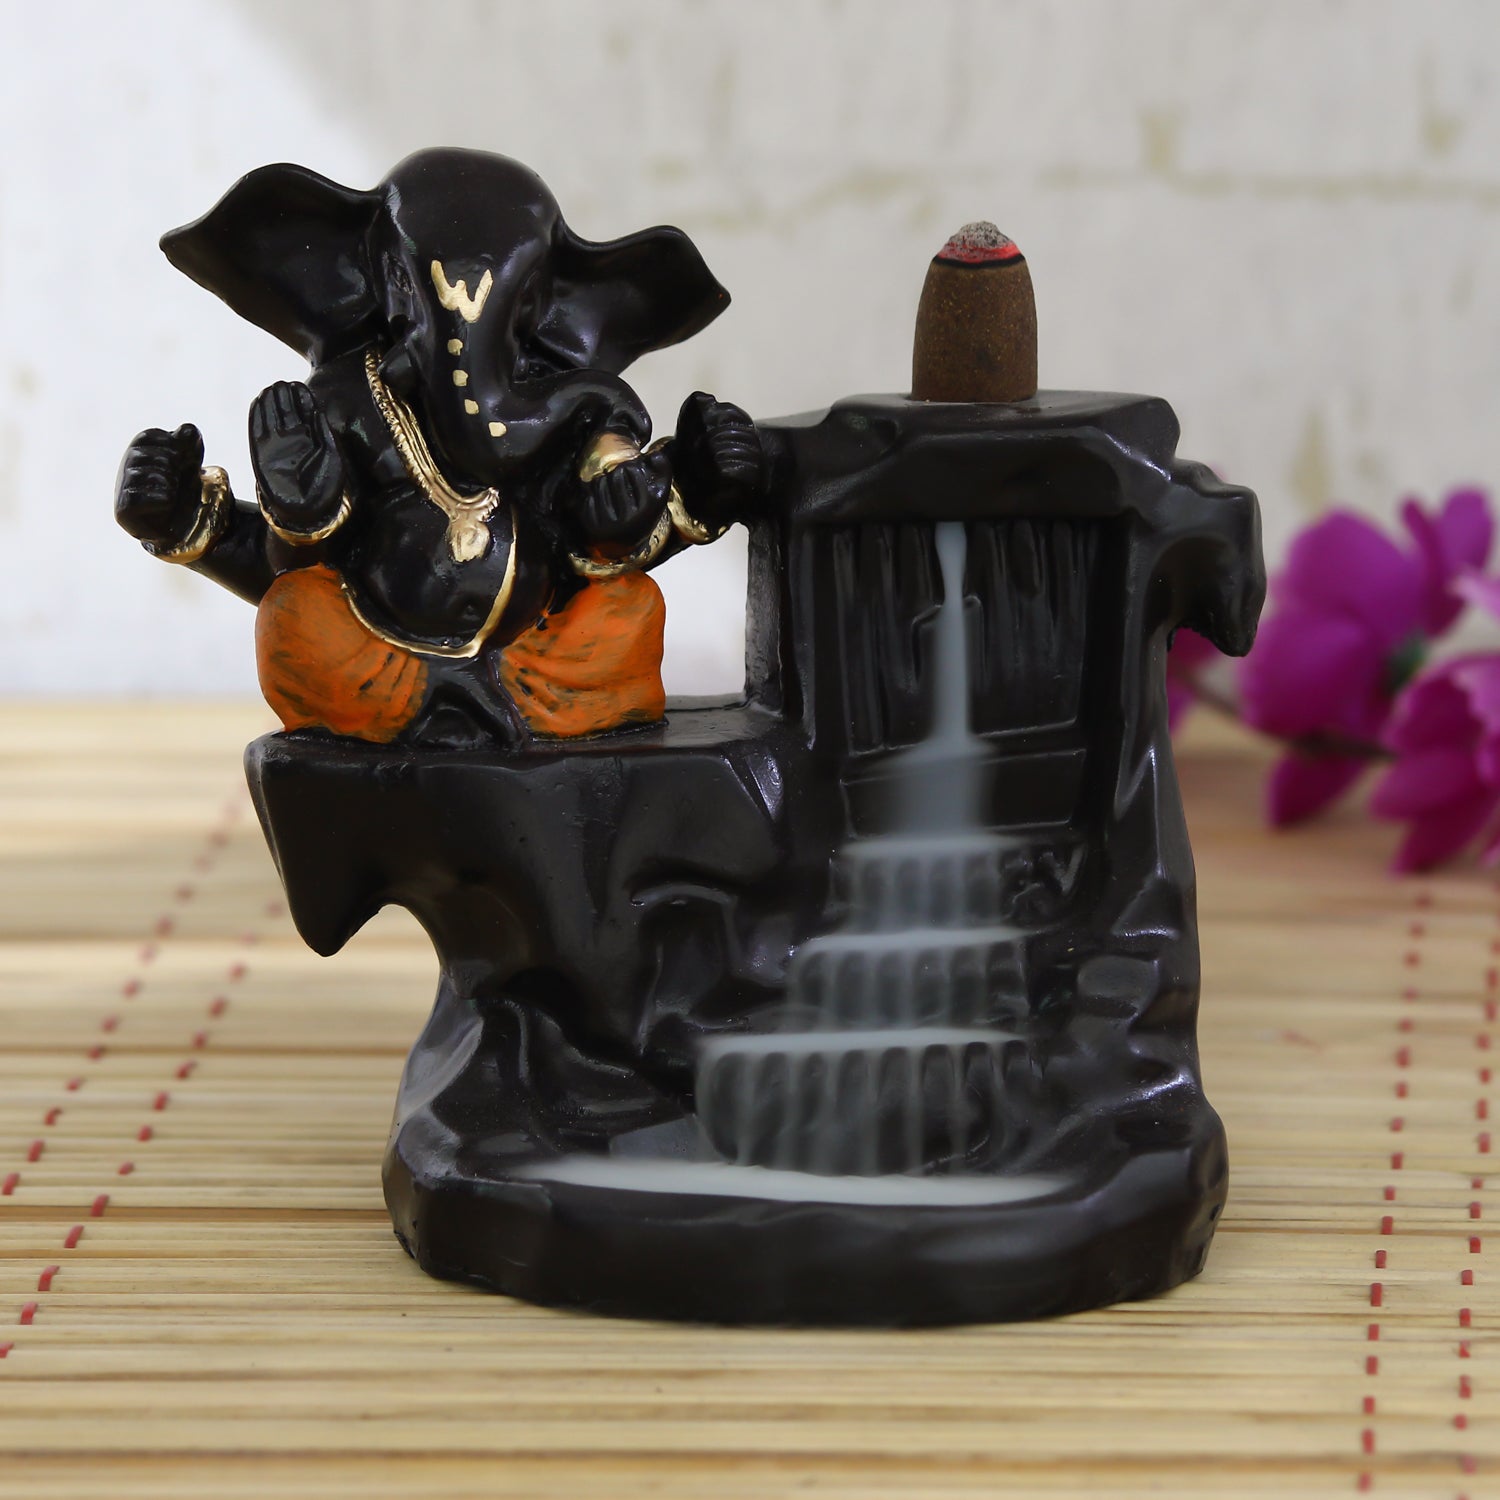 Lord Ganesha Idol Smoke Backflow Cone Incense Holder Decorative Showpiece